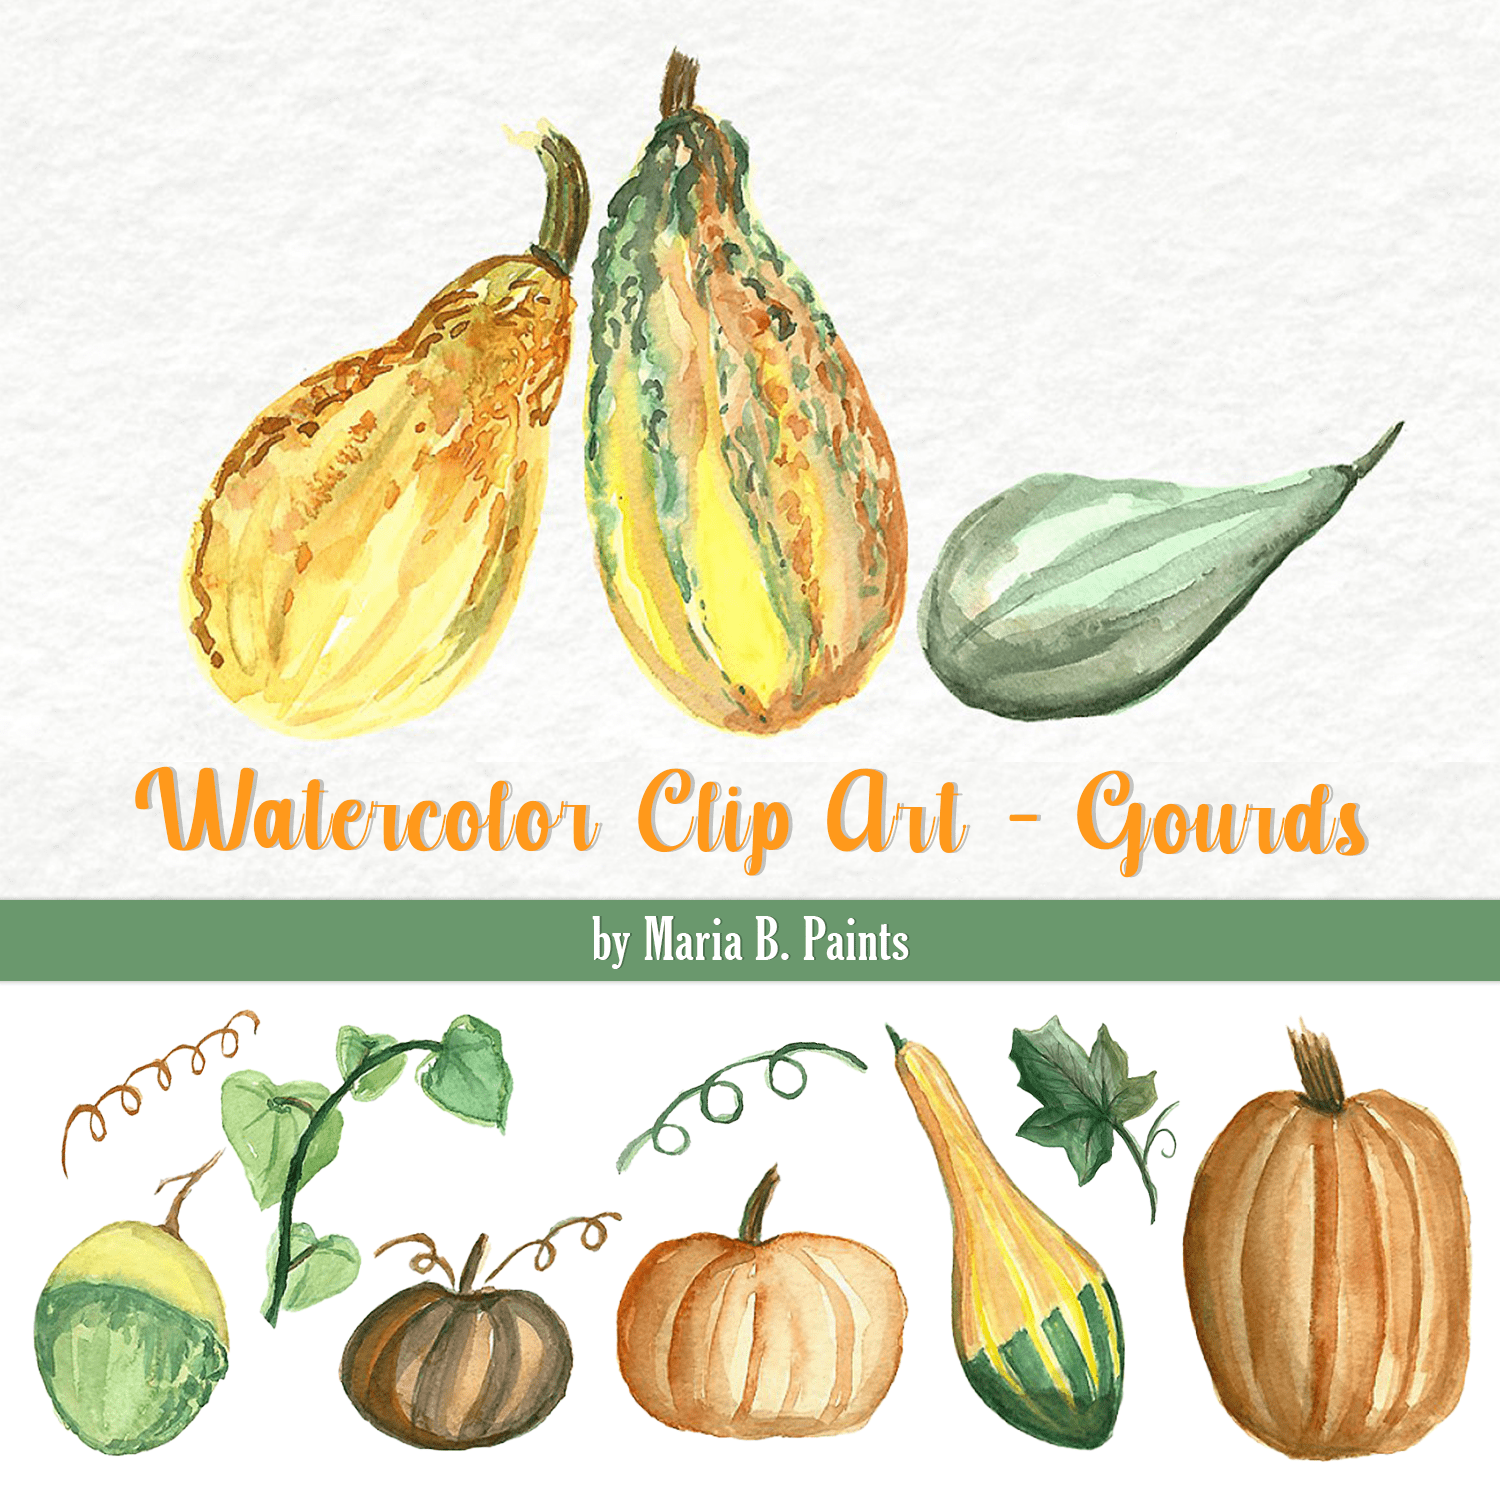 Watercolor Clip Art - Gourds.